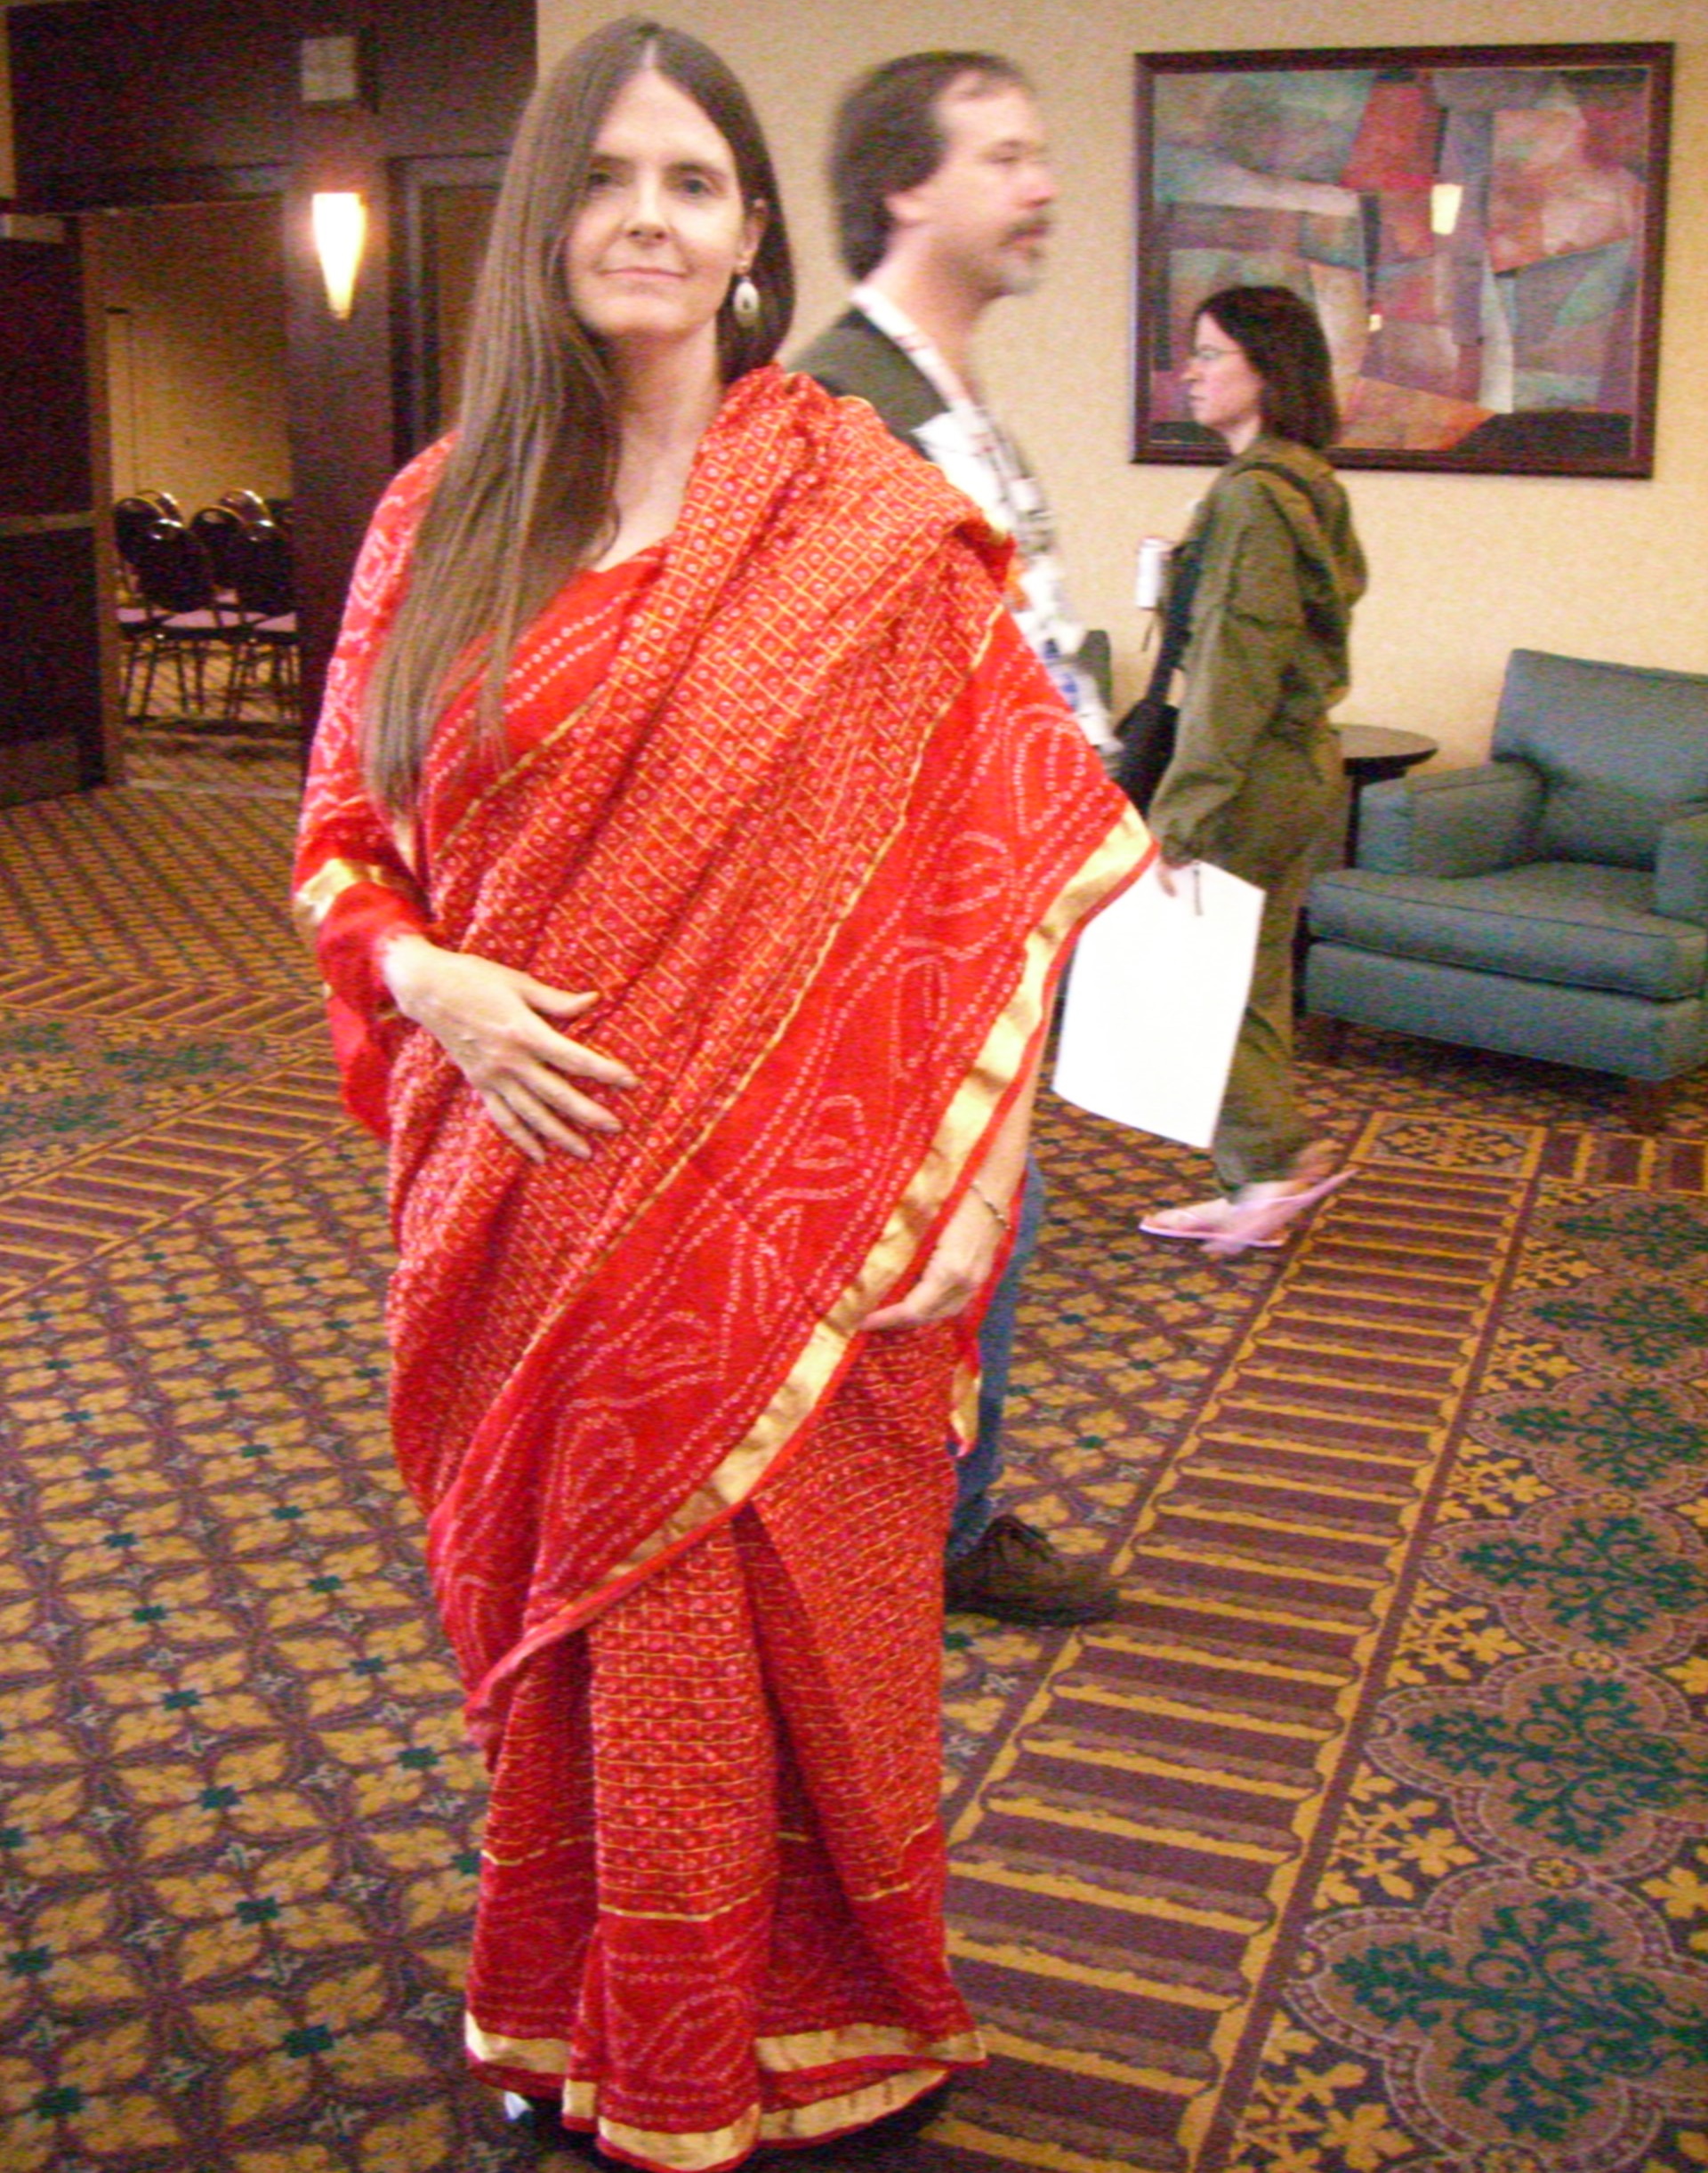 Kathy in a sari at ApolloCon 2007